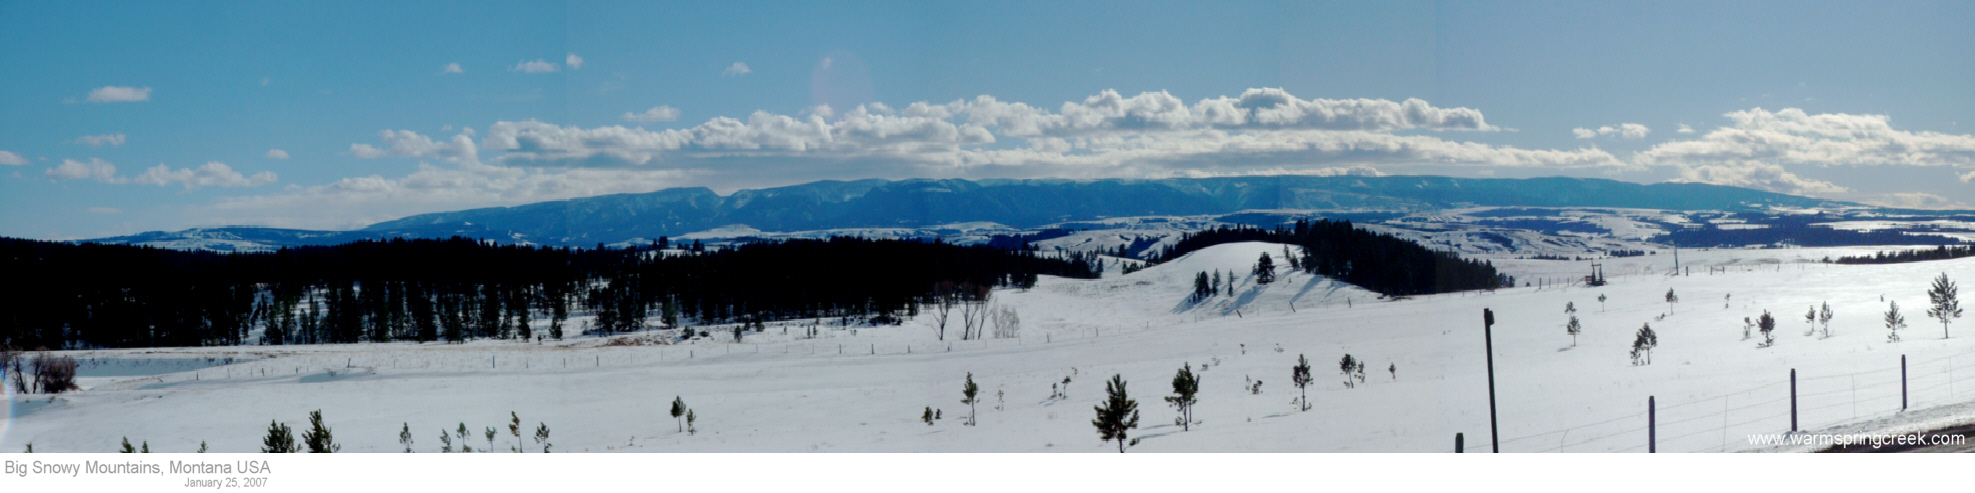 Big Snowy Mountains, Montana USA